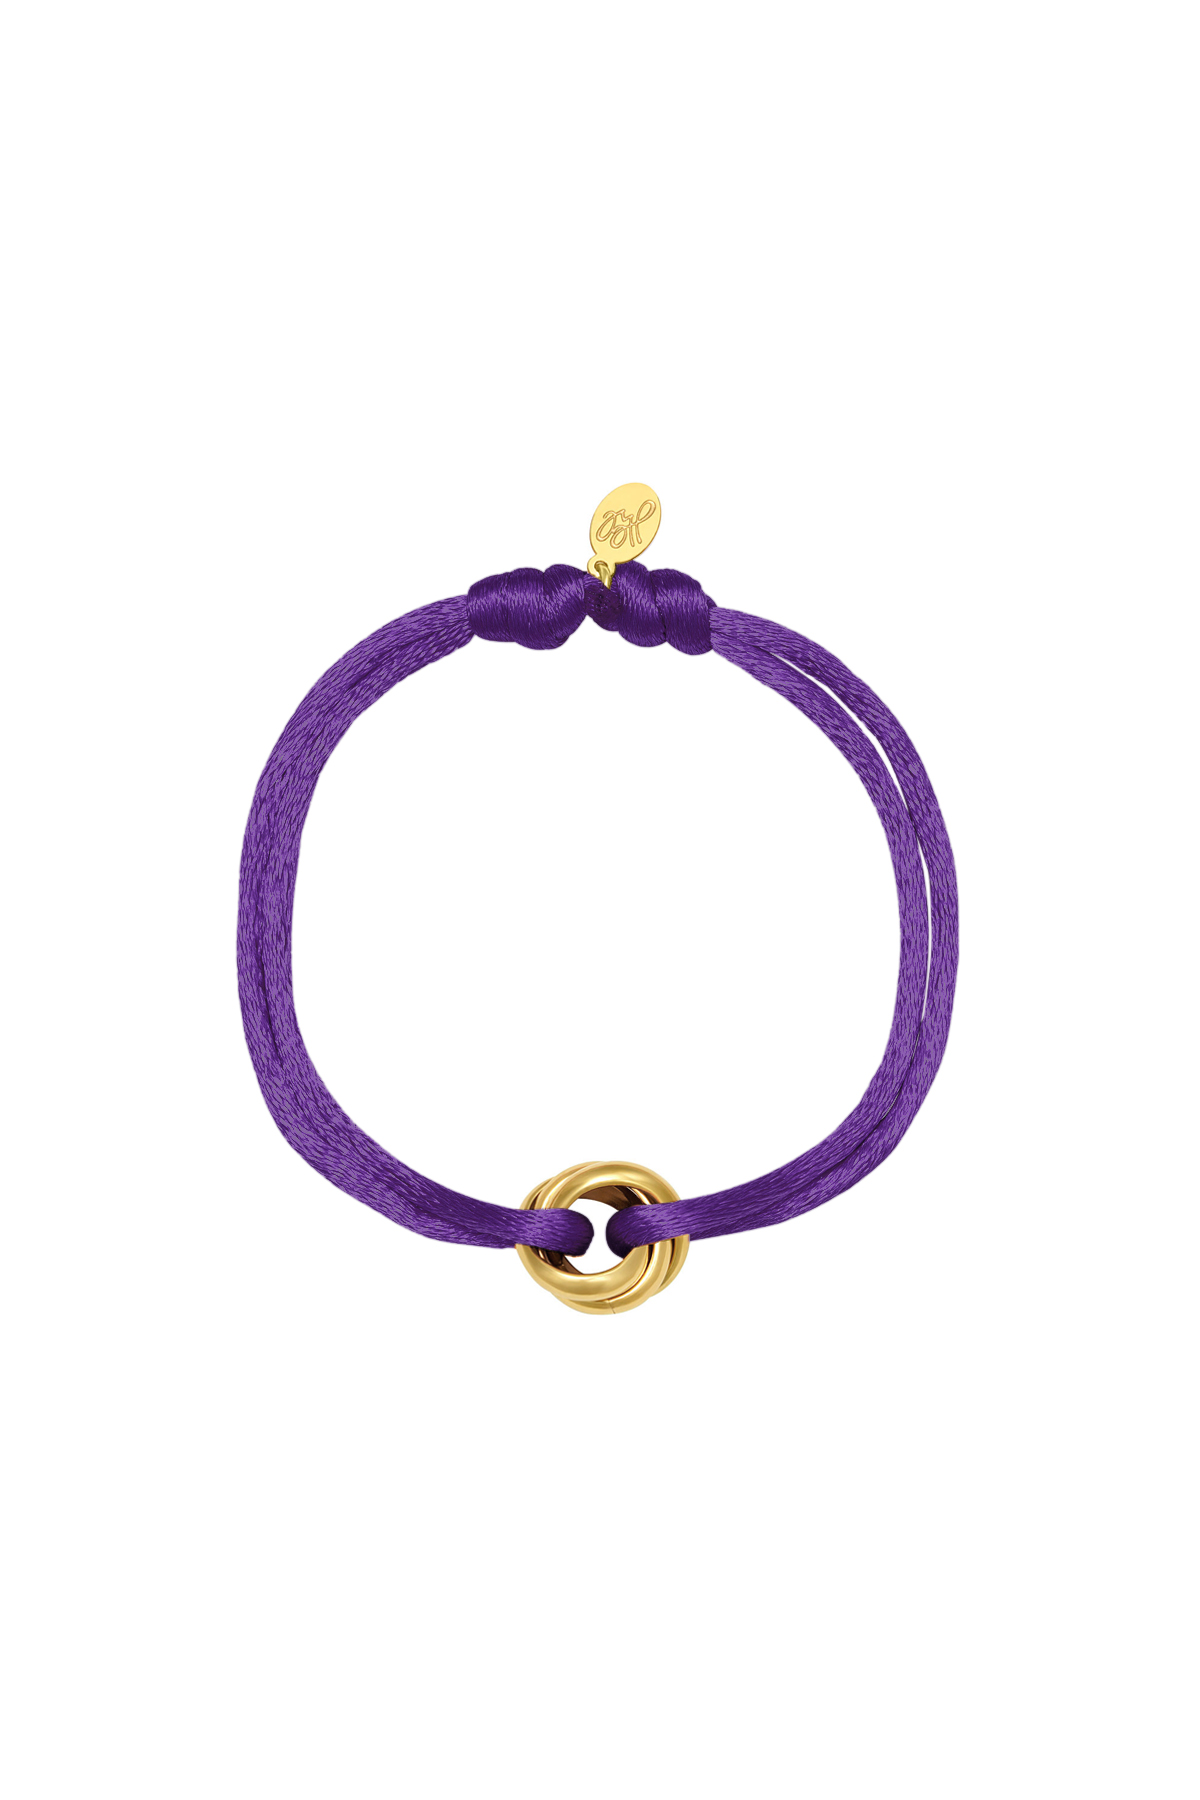 Bracelet Satin Knot purple Stainless Steel h5 